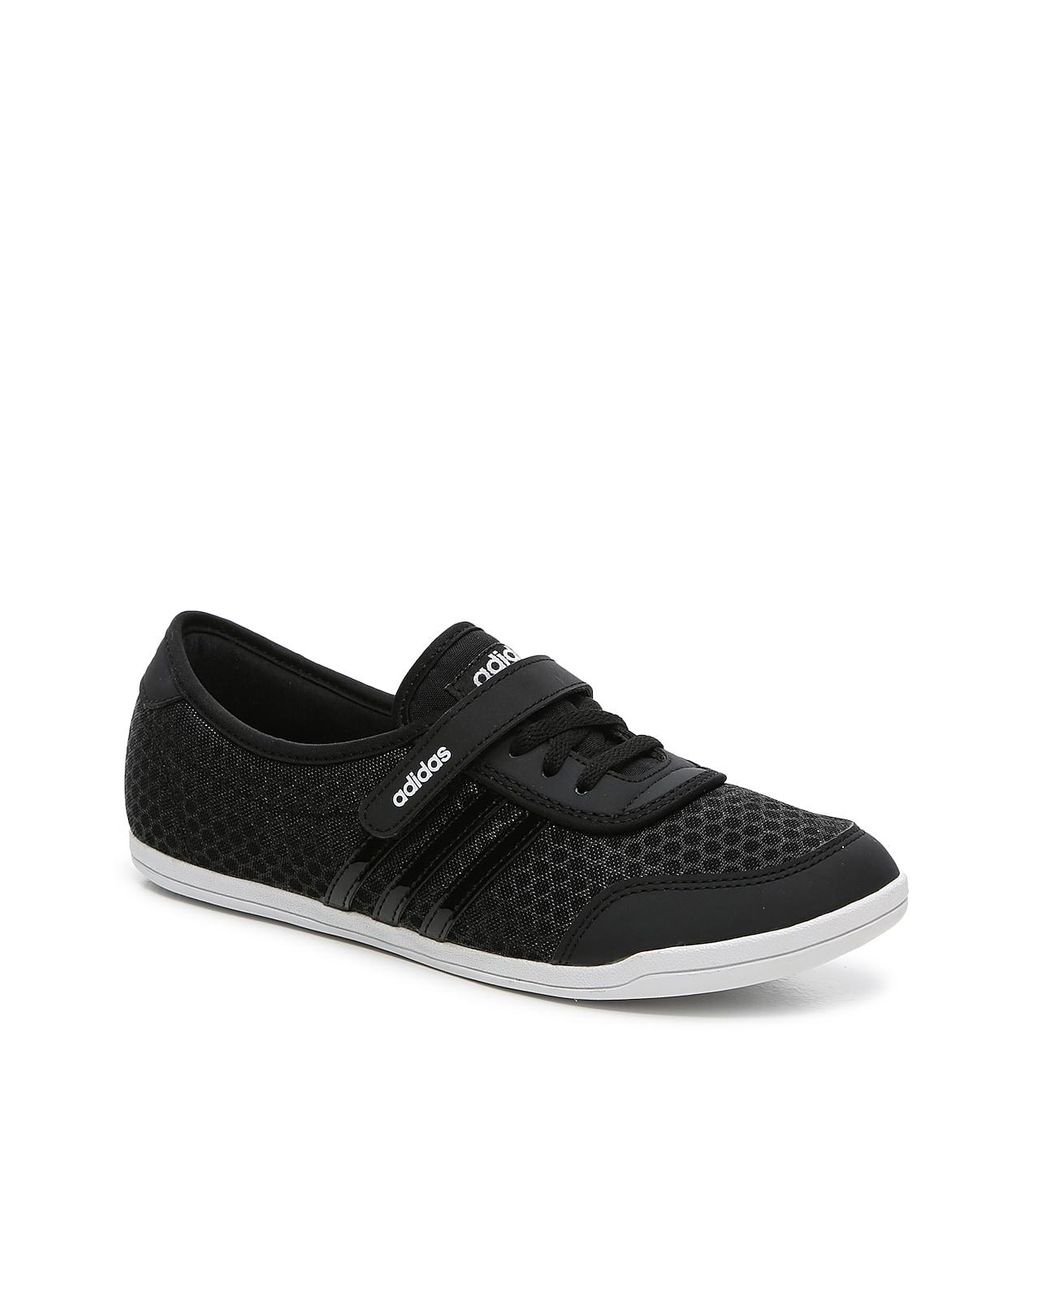 adidas Rubber Diona Slip-on Sneaker in Black/White (Black) | Lyst